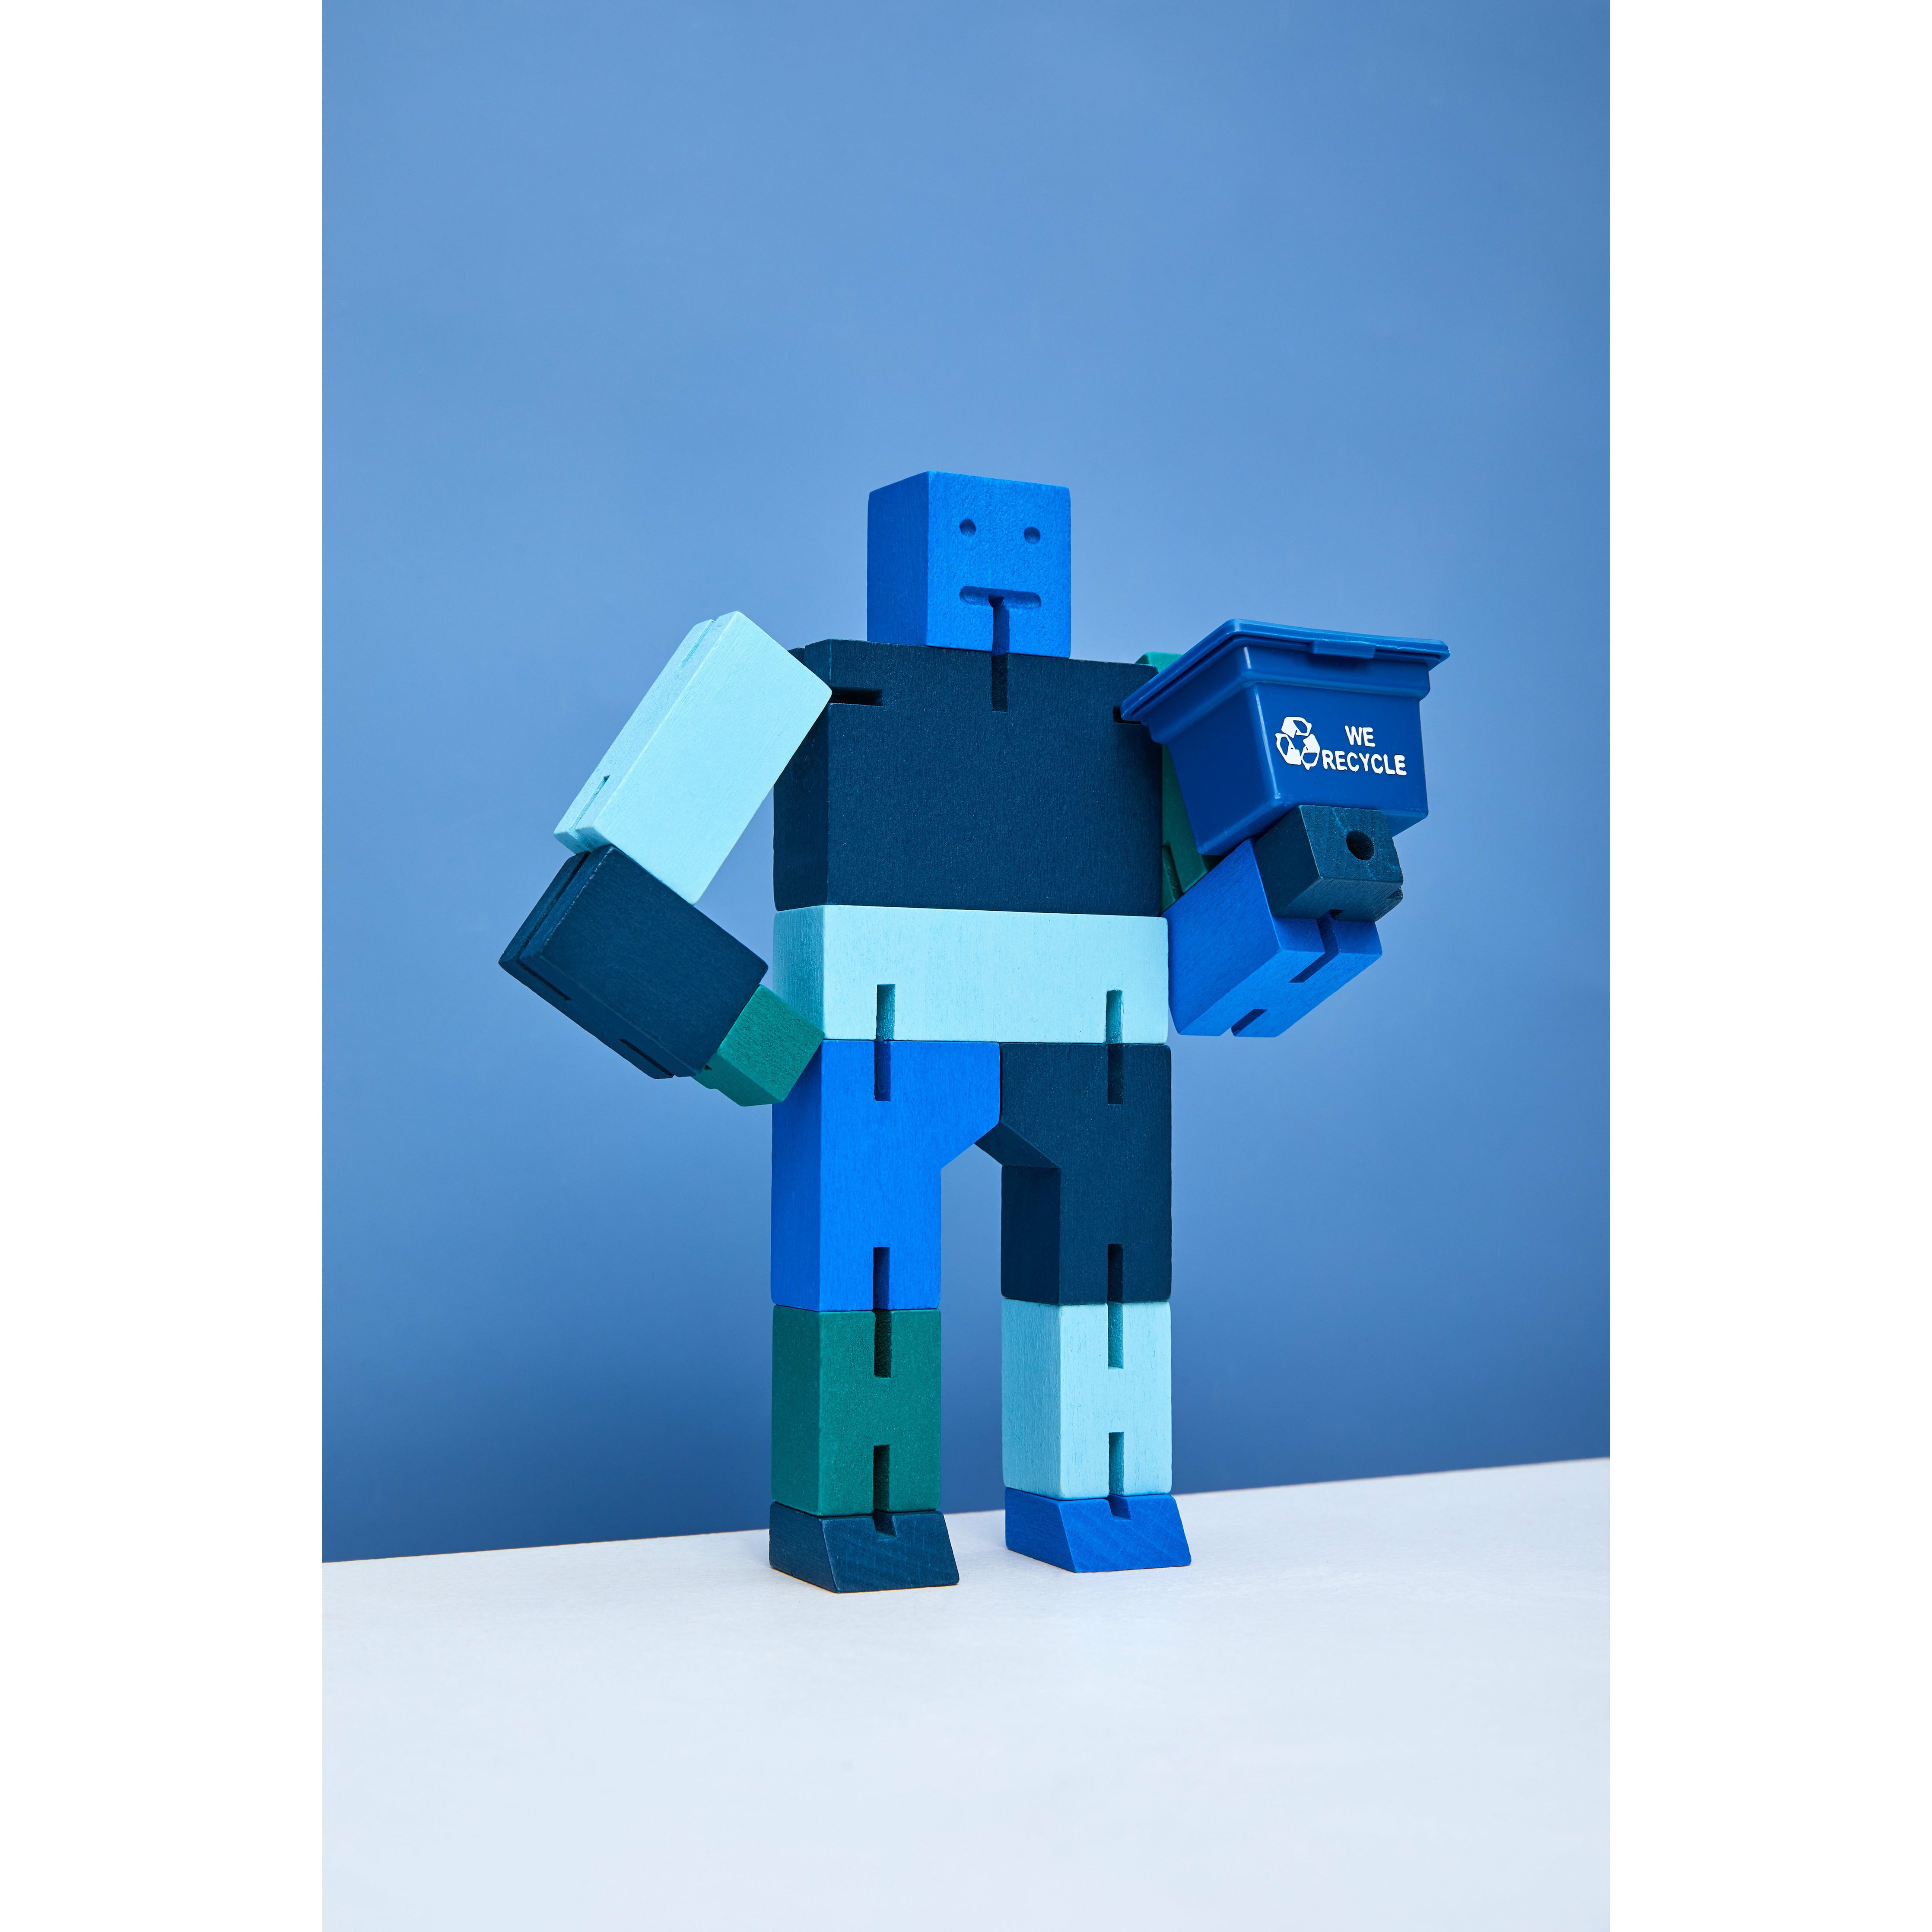 Cubebot®  Blue Multi